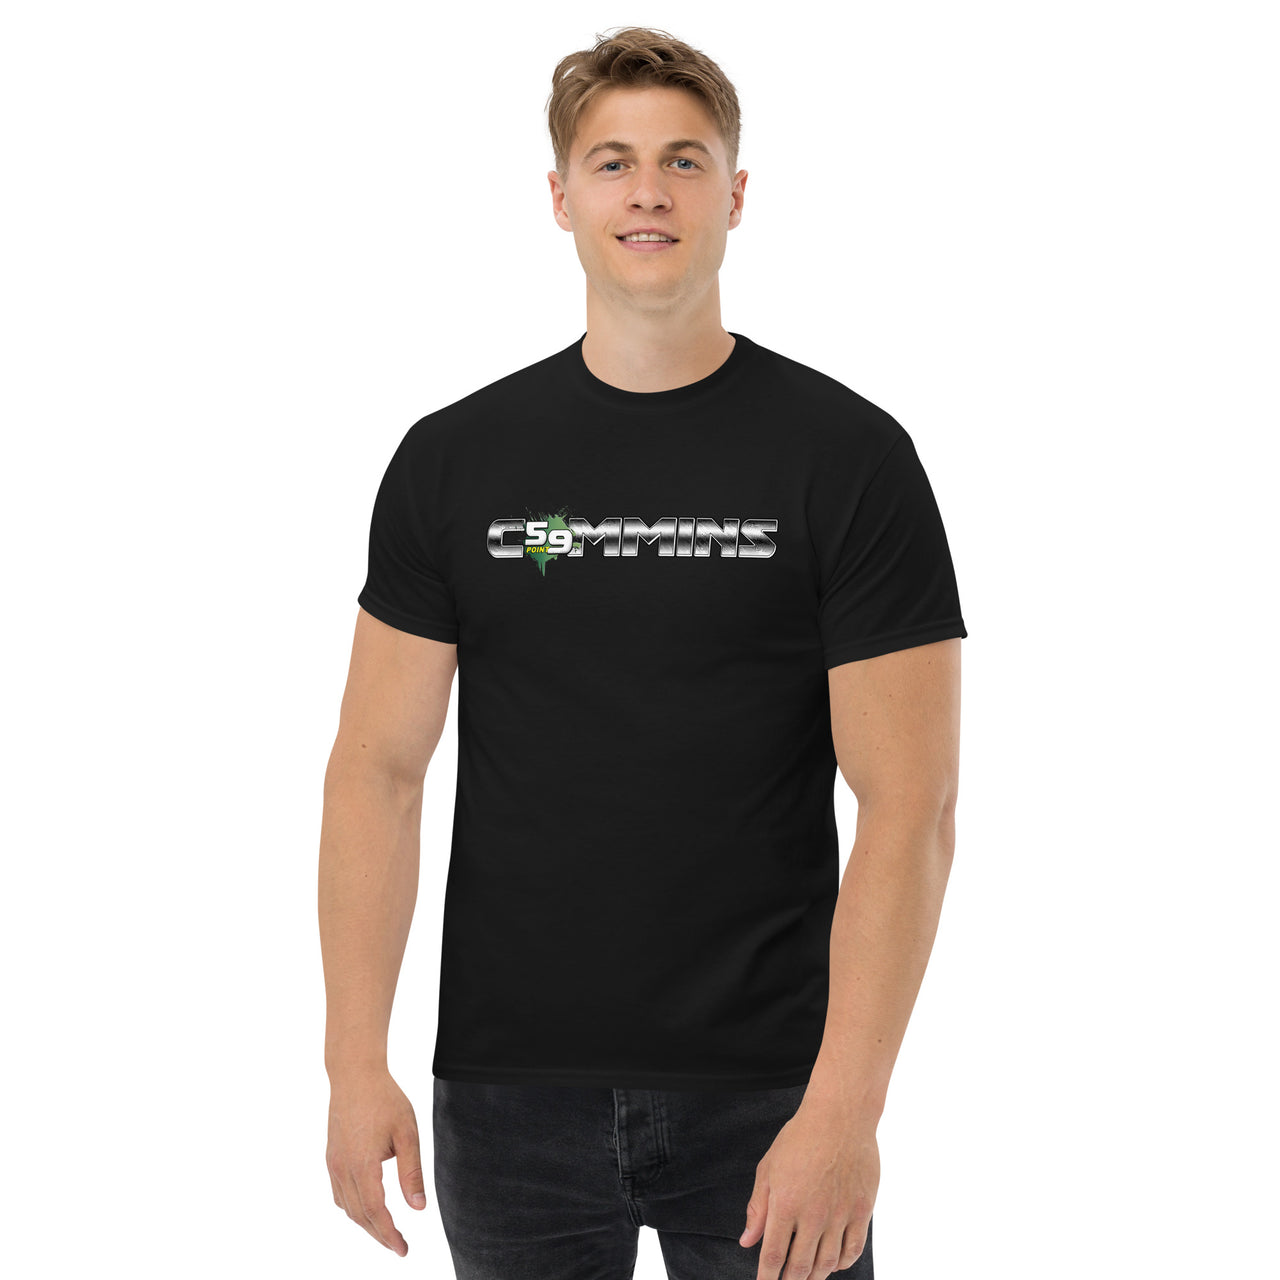 5.9 Diesel T-Shirt modeled in black